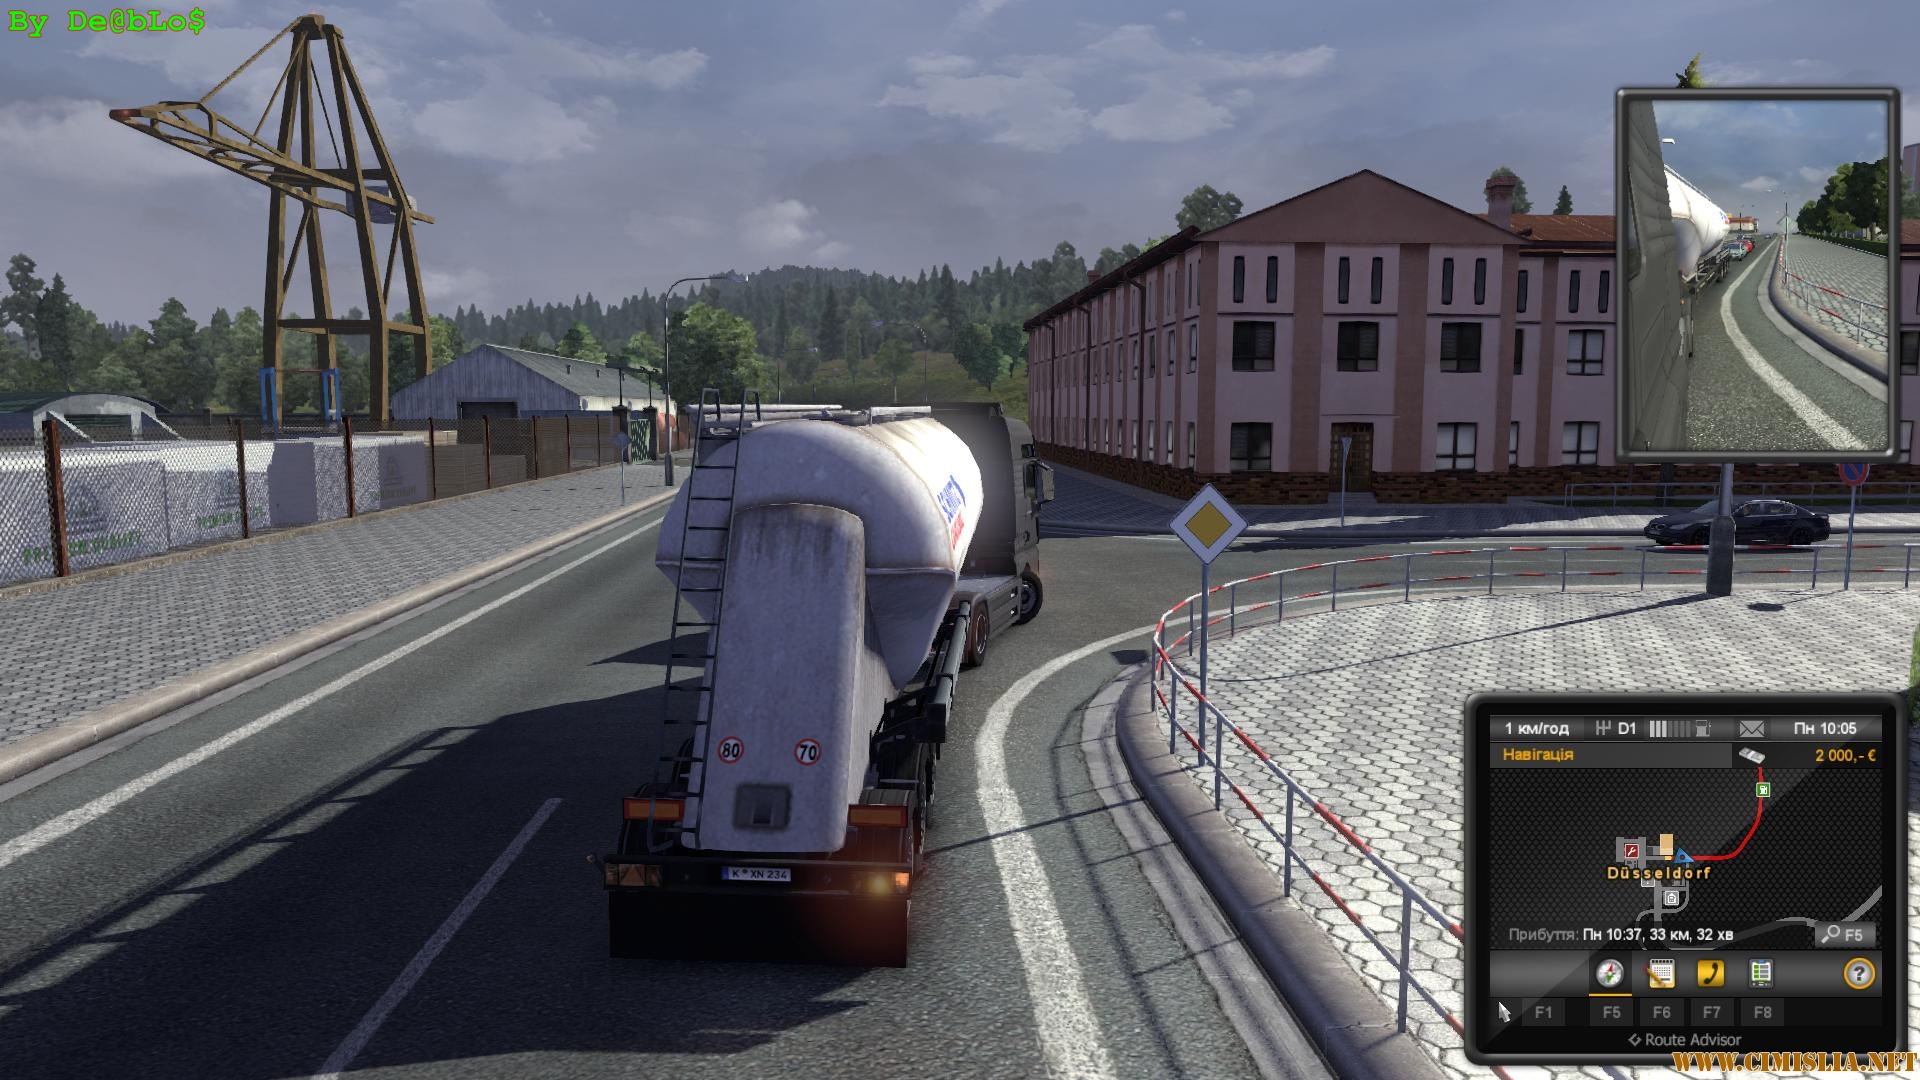 Игра евро трек симулятор 3. Евро трак симулятор 3. Евротур симулятор 3. Euro Truck Simulator 3 PC games. Труск симулятор 2 ЗС.